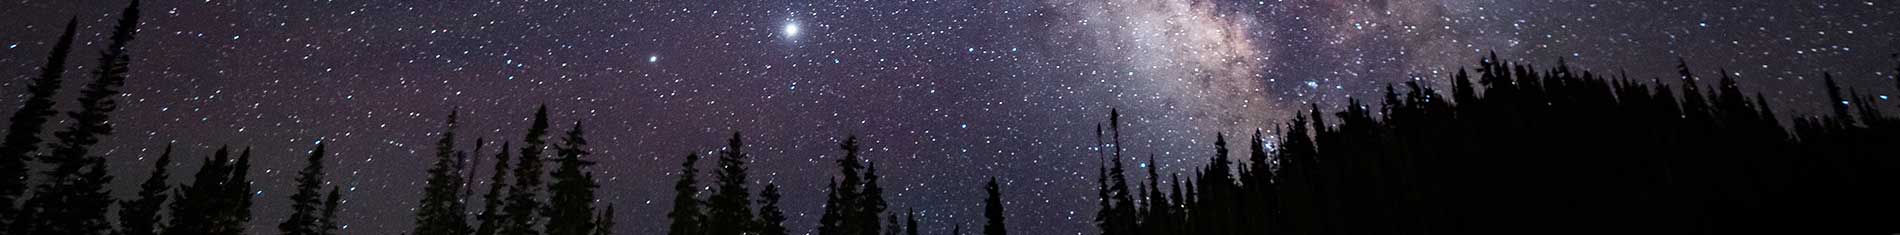 Inside Aspen Snowmass - Summer - Stars over Aspen, Colorado